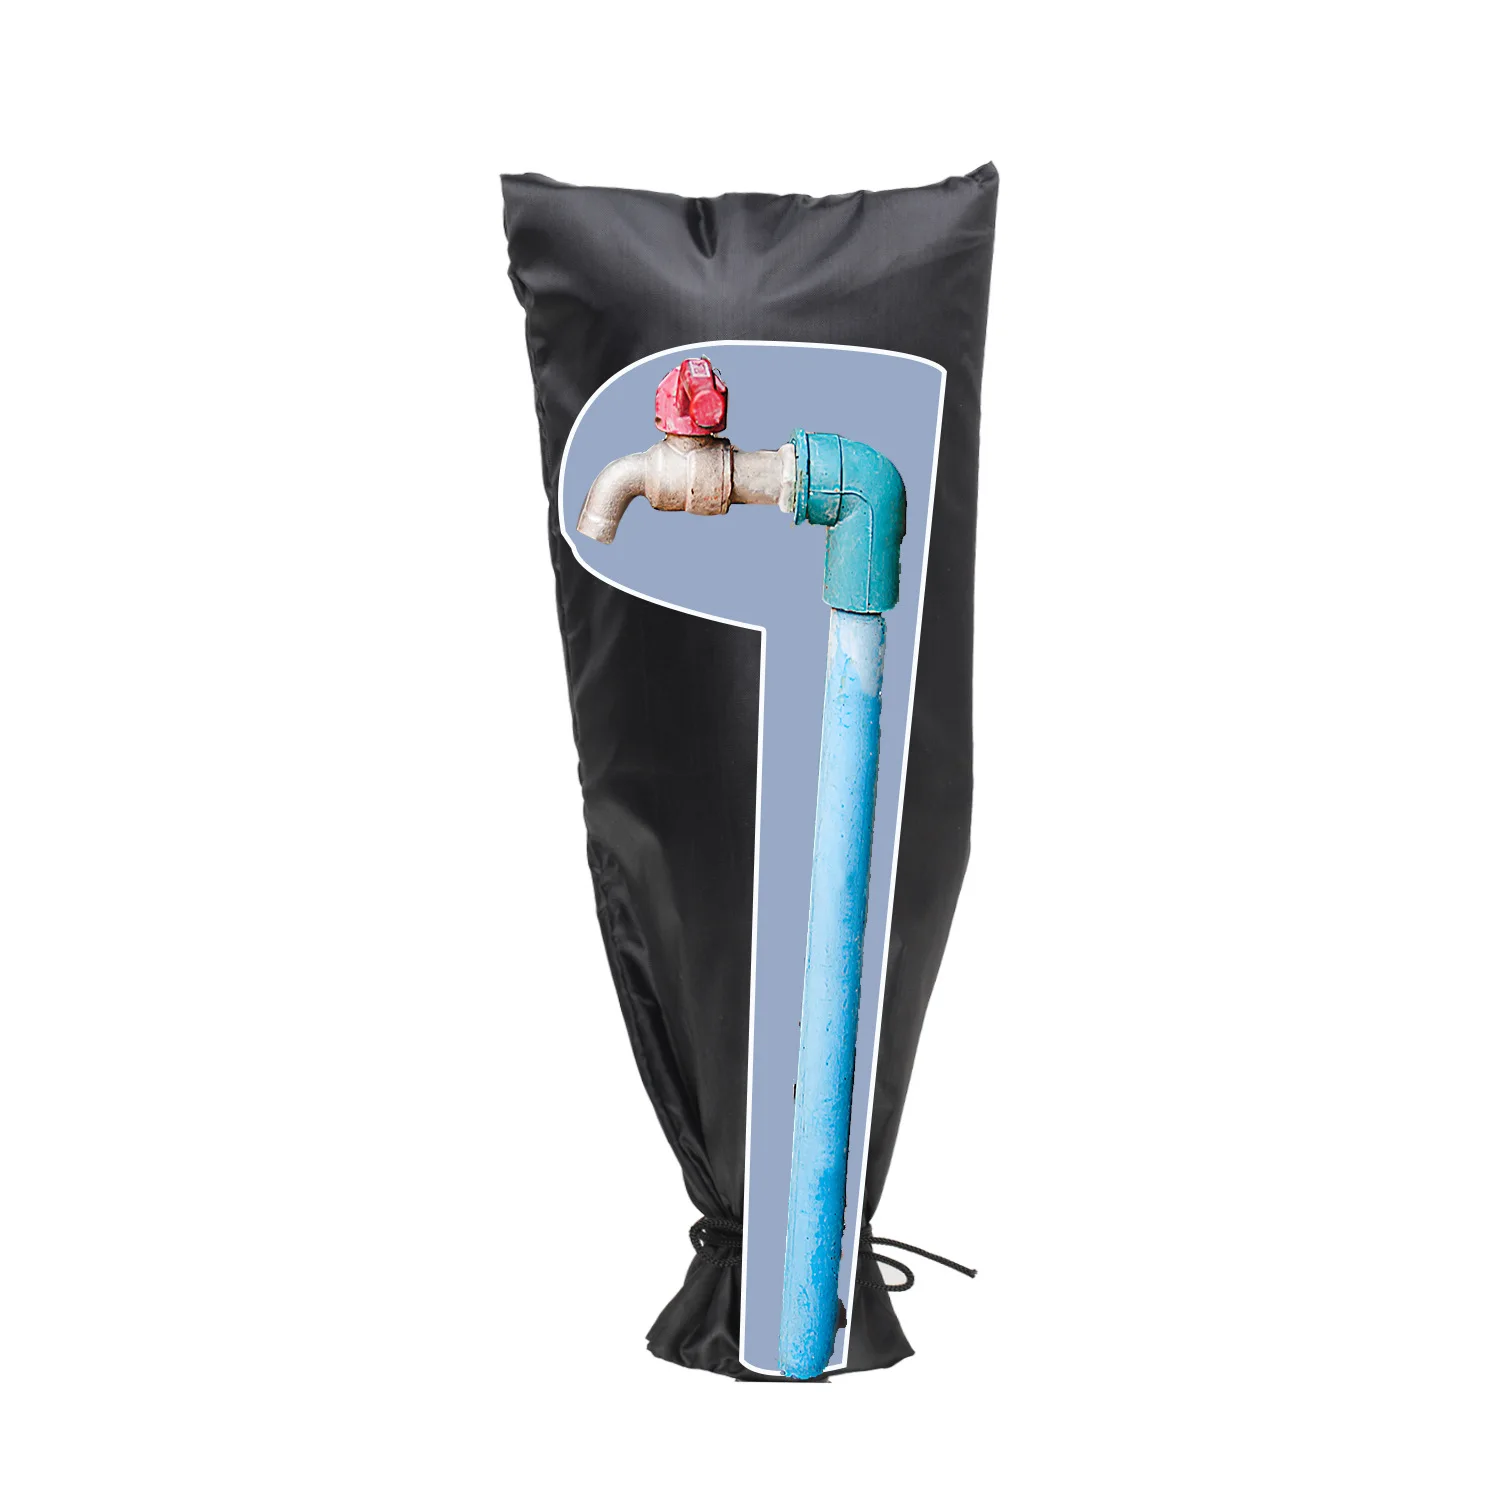 Водонепроницаемый кран крышка кран защита от замерзания для защиты зима антифриз кран крышка Мягкий Открытый кран носки - Цвет: A1